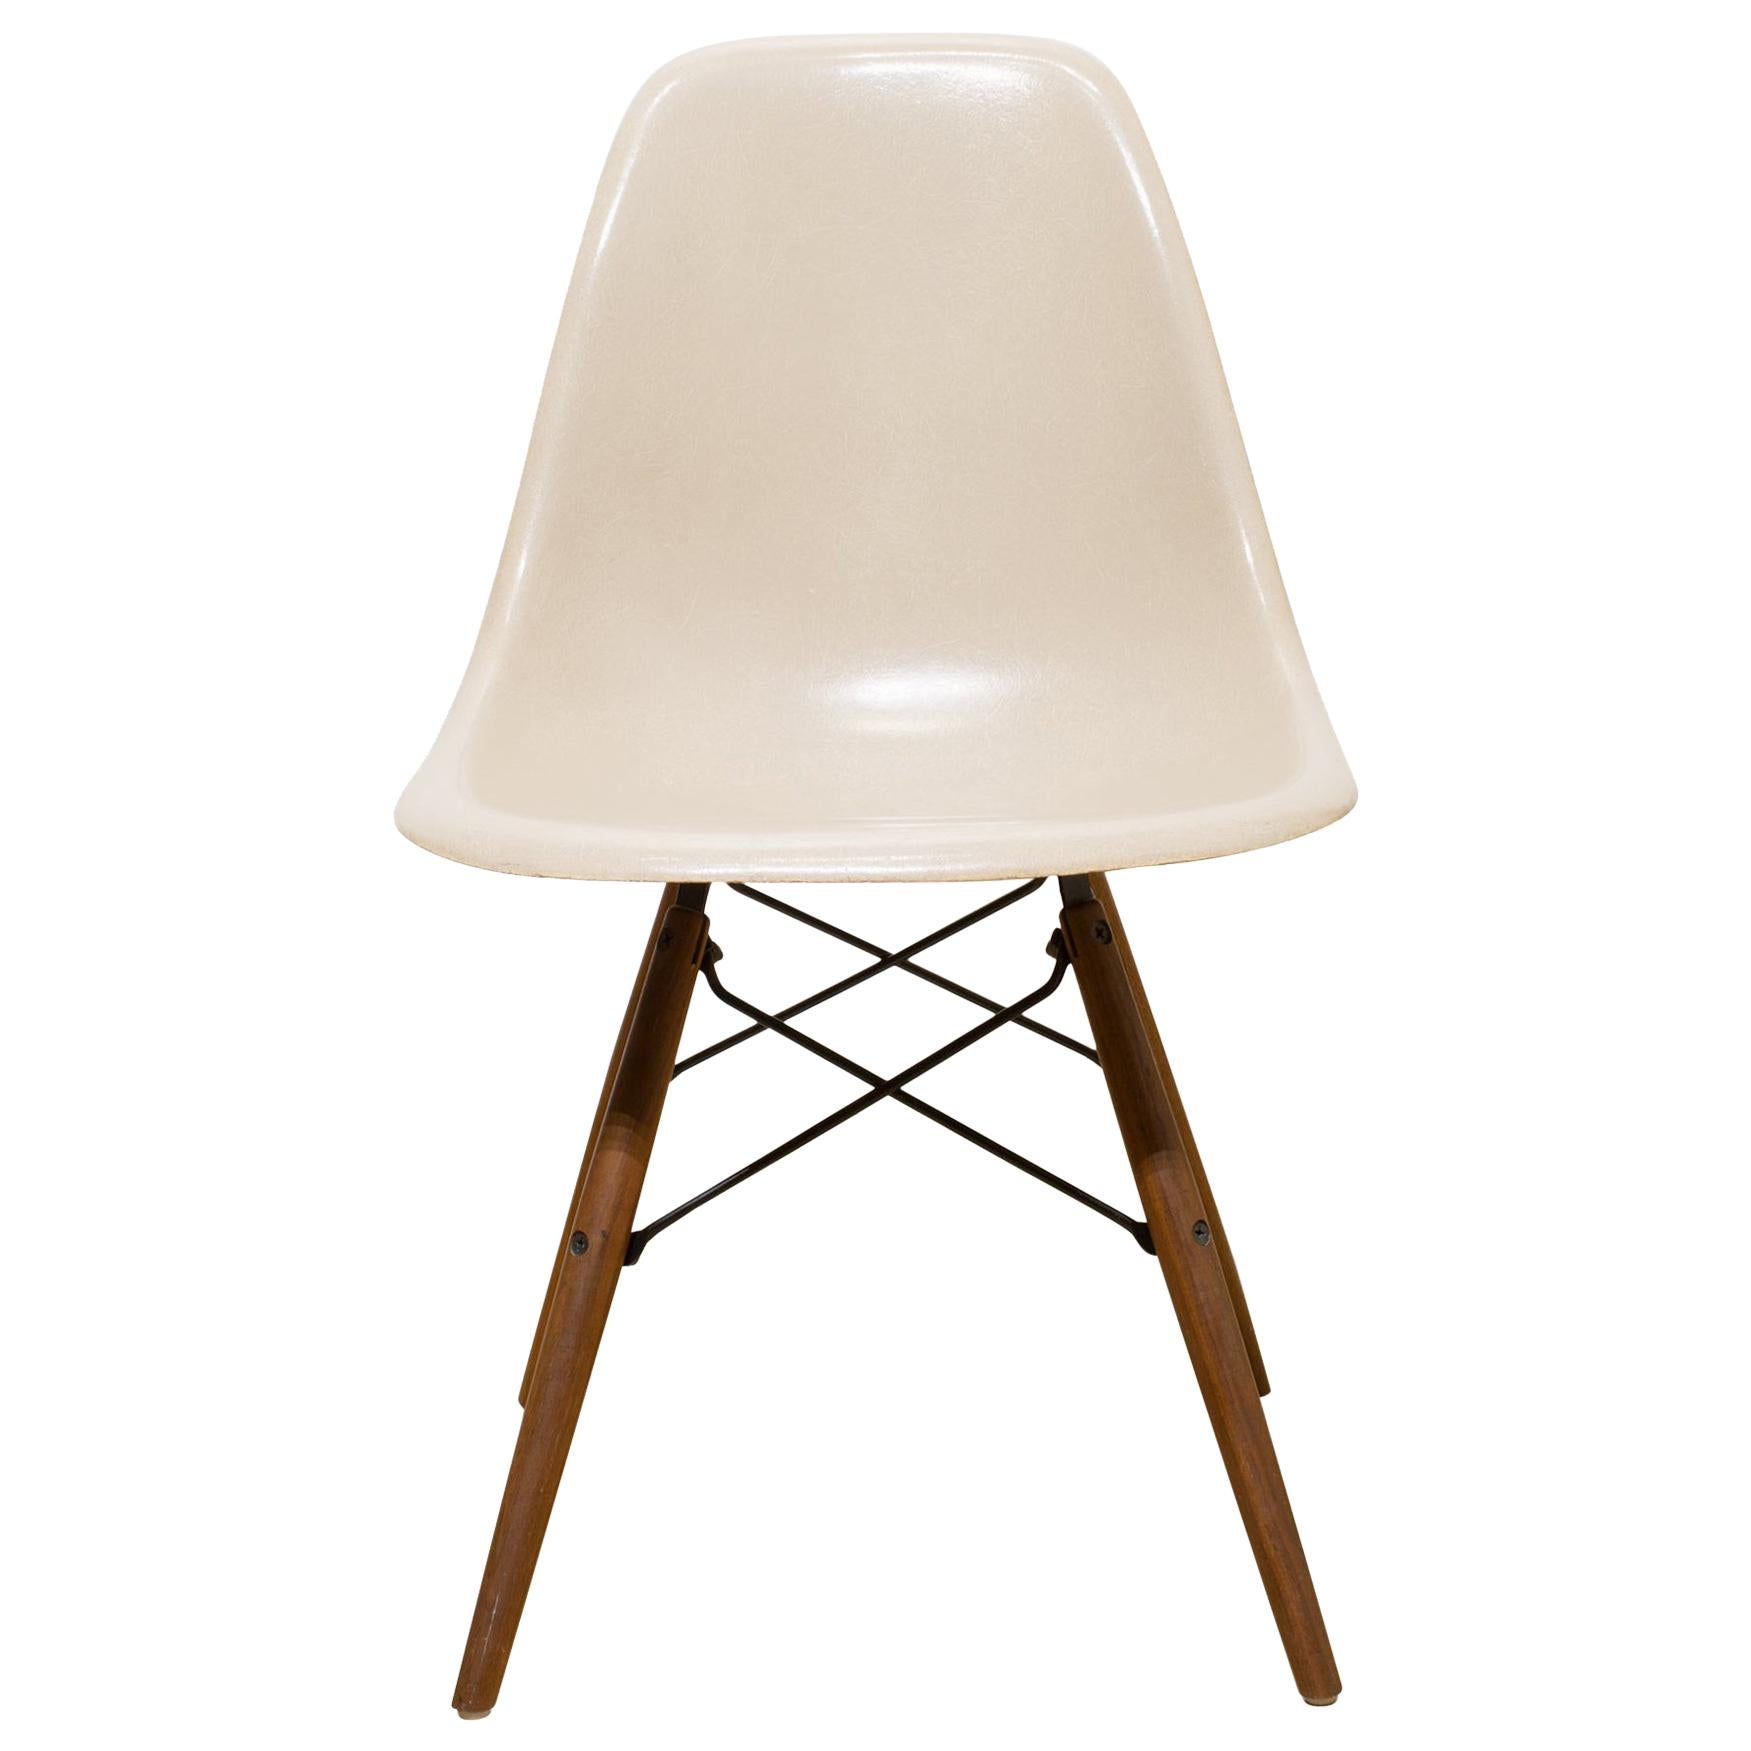 Eames for Herman Miller Fiberglass Shell Chair in Light Grey, circa 1950s